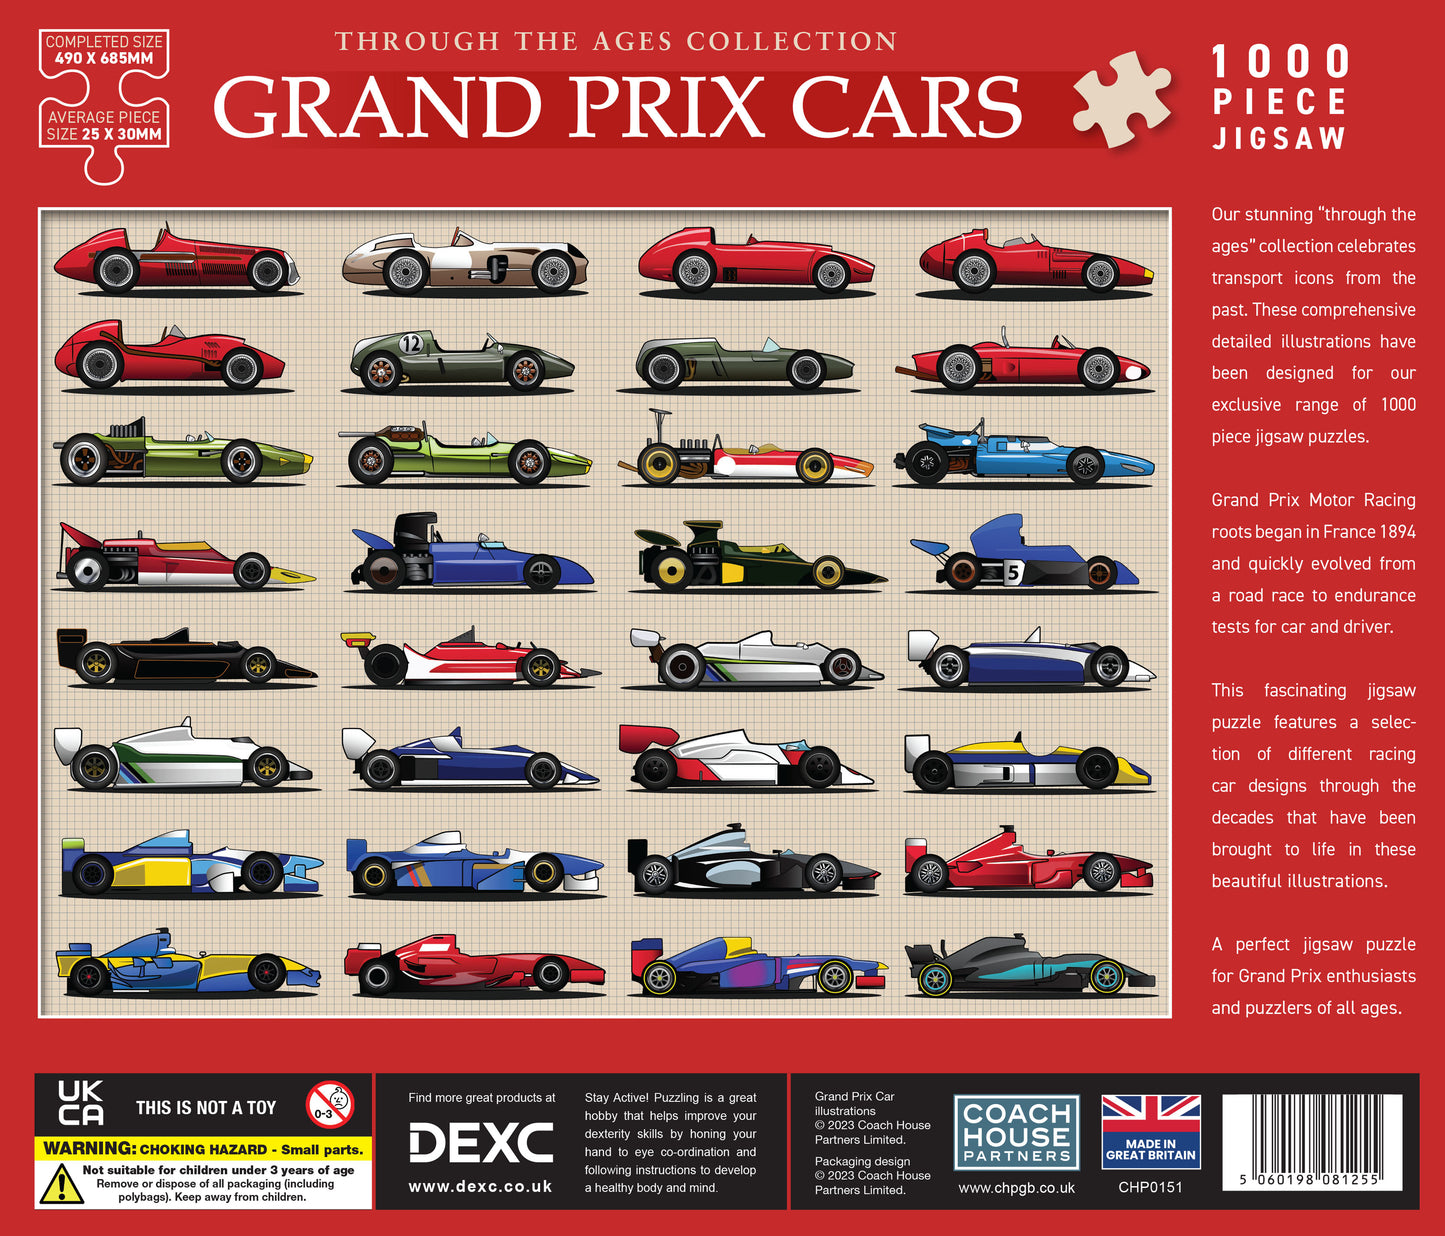 Grand Prix Racing Cars 1000 Piece Jigsaw Puzzle